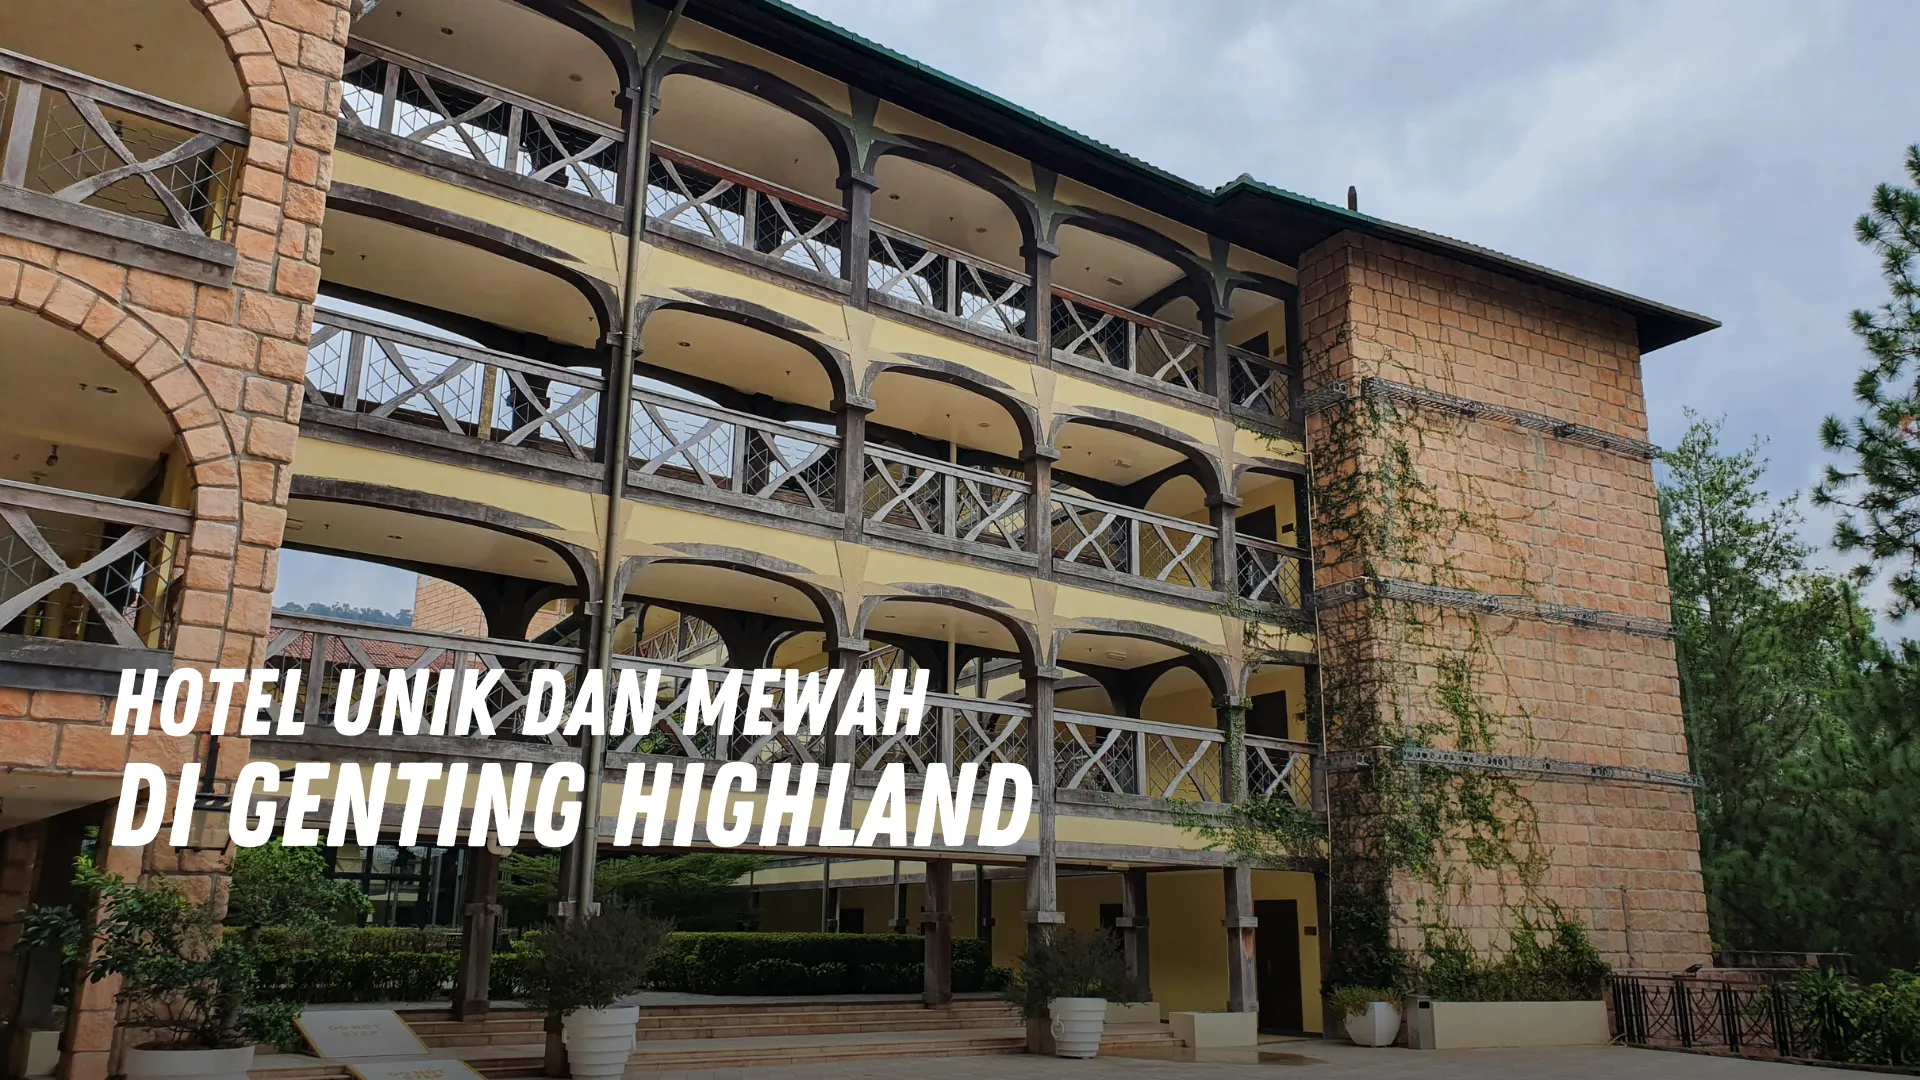 Hotel Unik dan Mewah di Genting Highland Malaysia